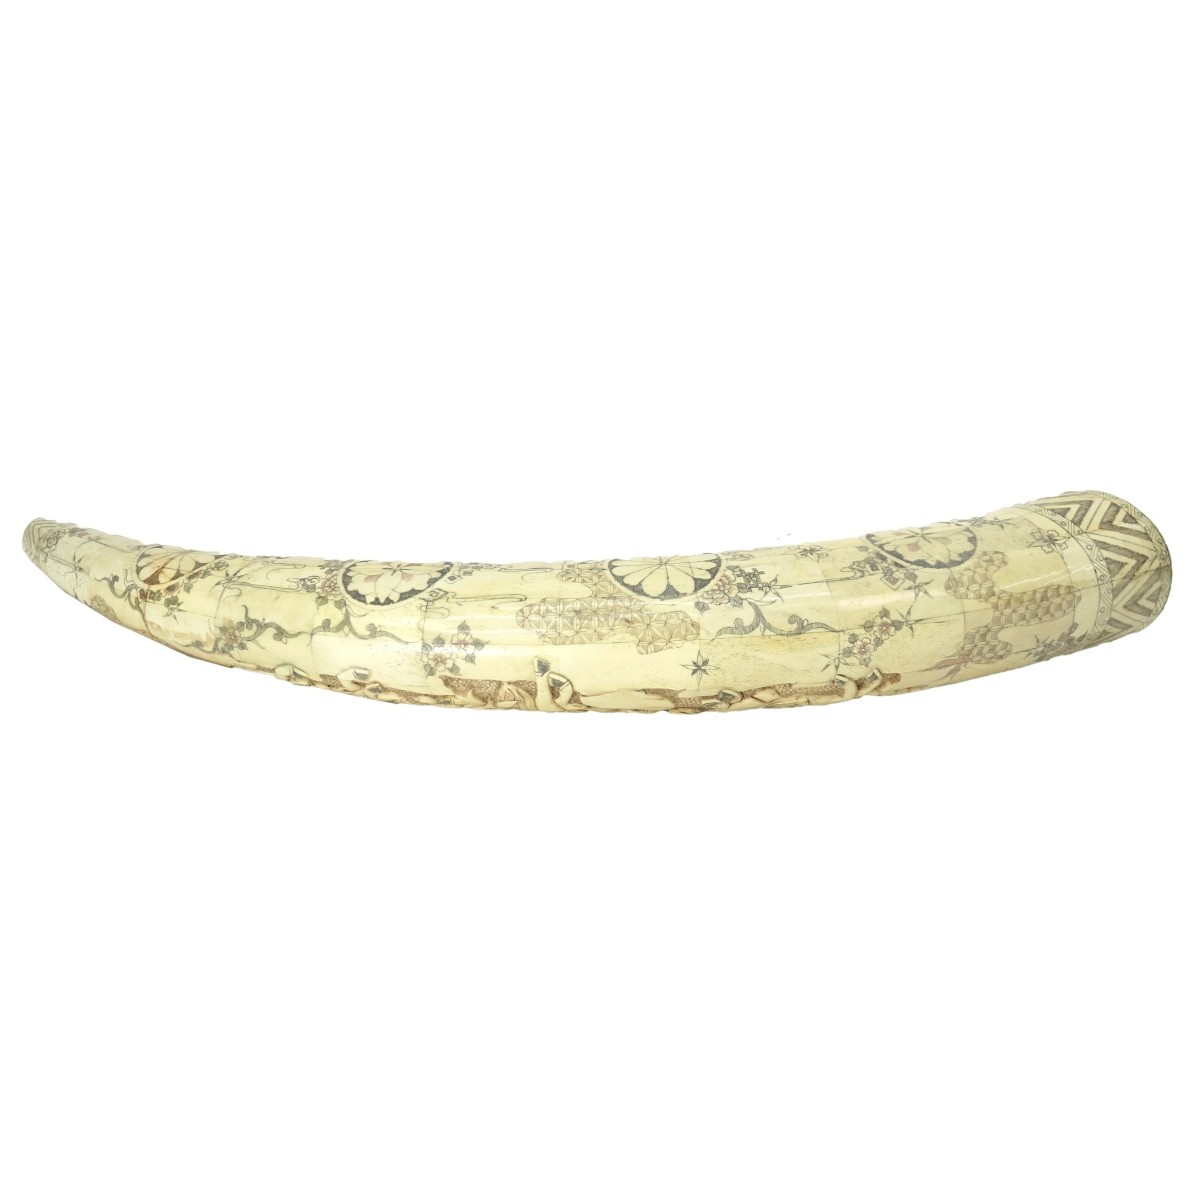 Large Chinese Polychrome Carved Bone Tusk